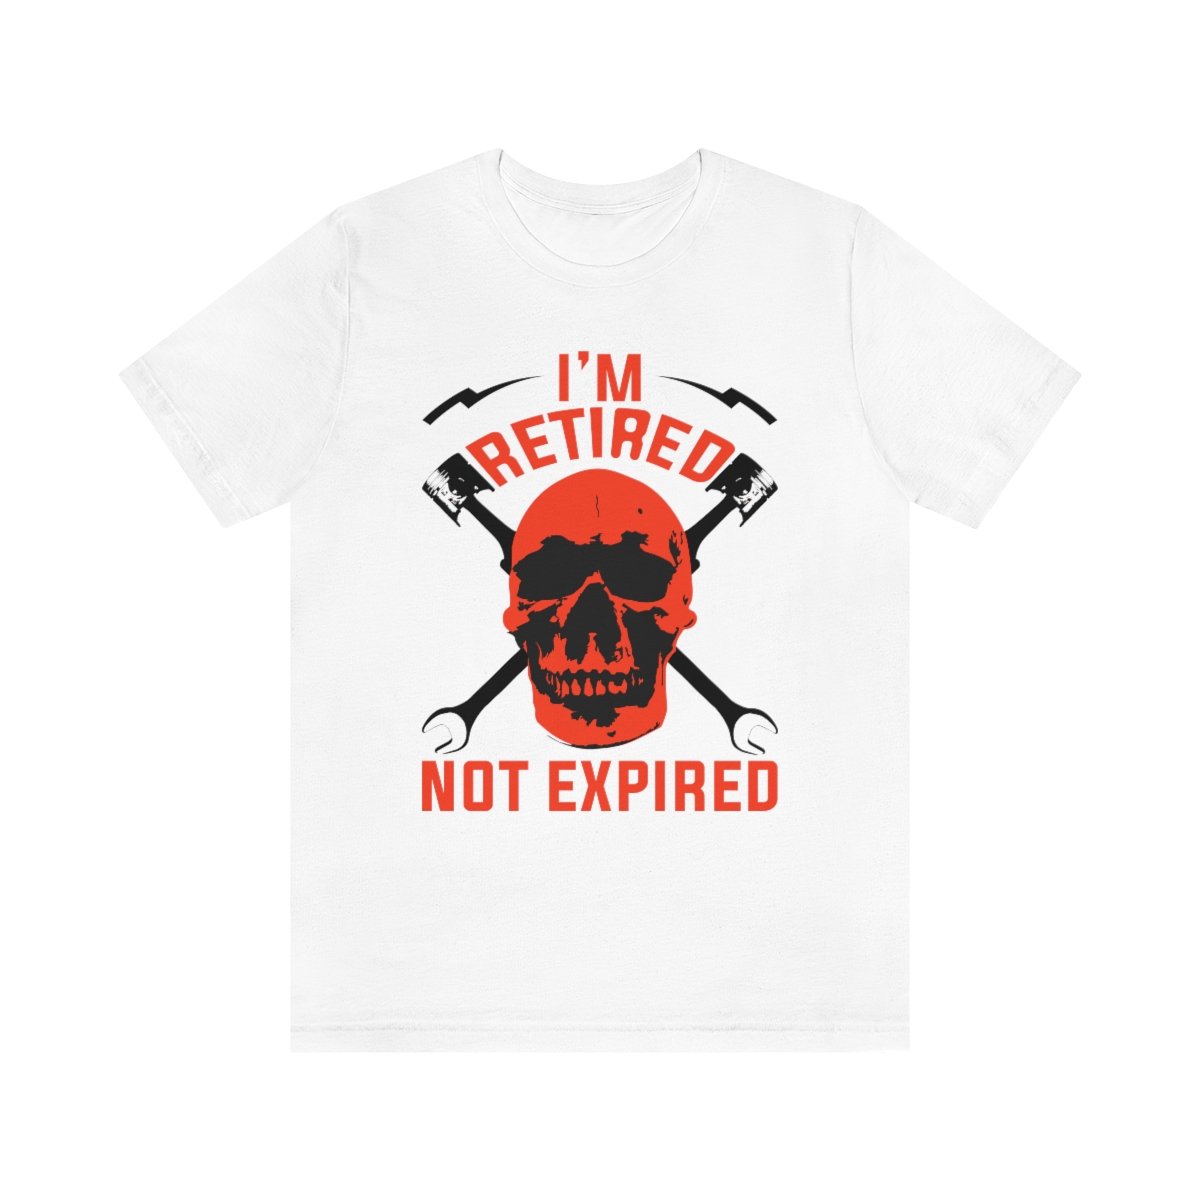 I'm Retired Not Expired - Unisex - Jersey Short Sleeve Tee - Light Colors - T-Shirt